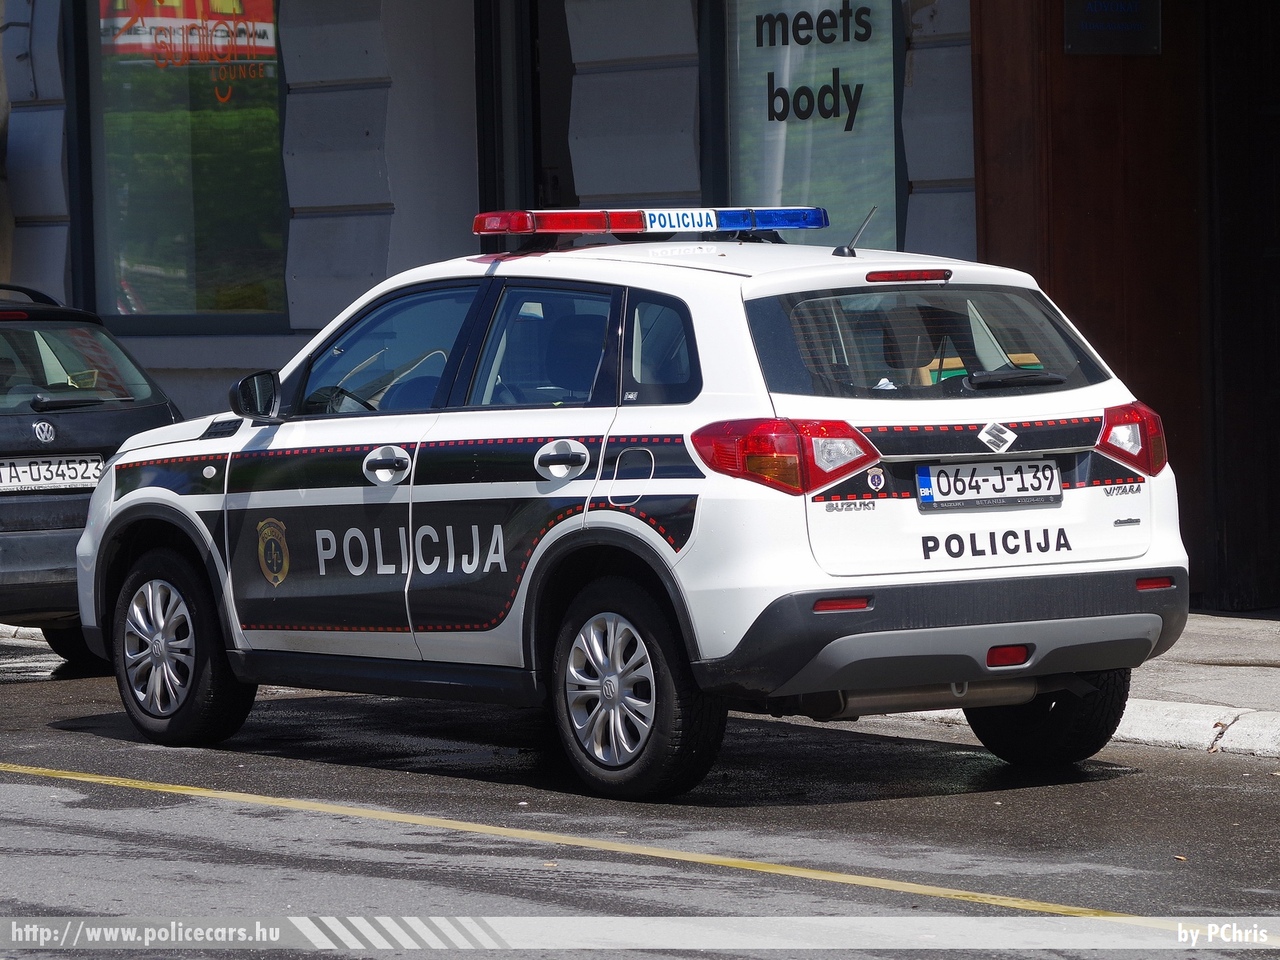 Suzuki Vitara, Sarajevo, fotó: PChris
Keywords: Bosznia-Hercegovina bosnia bosnia-herzegovina bosnyák police policecar rendőrautó rendőr rendőrség